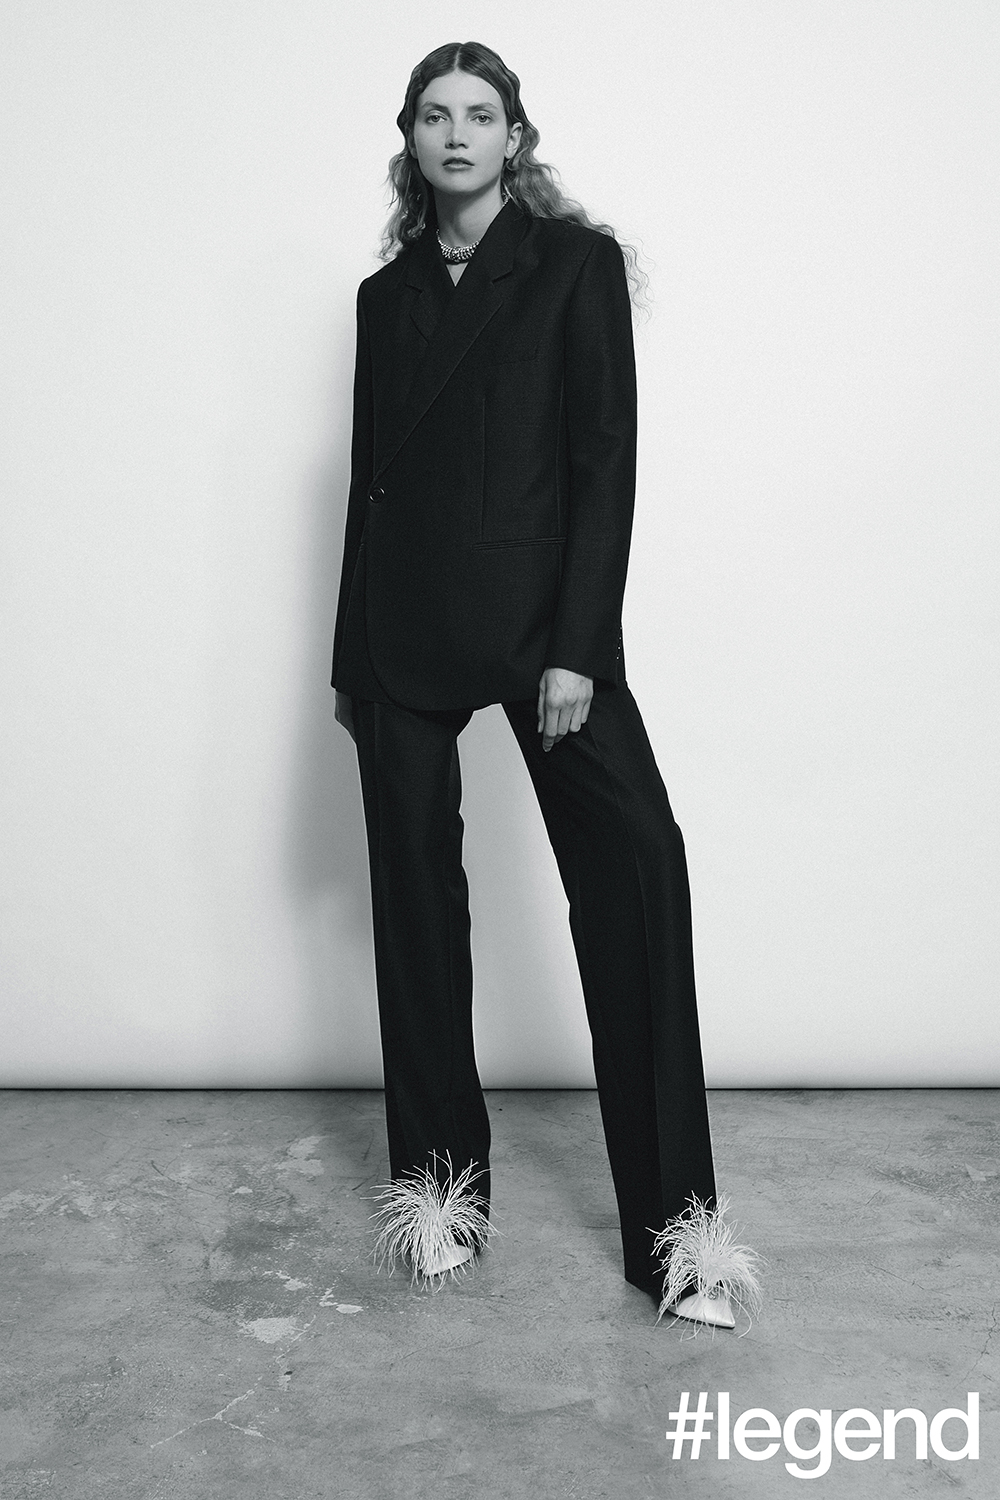 Black suit_Dior Homme; Rhinestone collar_Miu Miu; White pumps with plume_Jimmy Choo